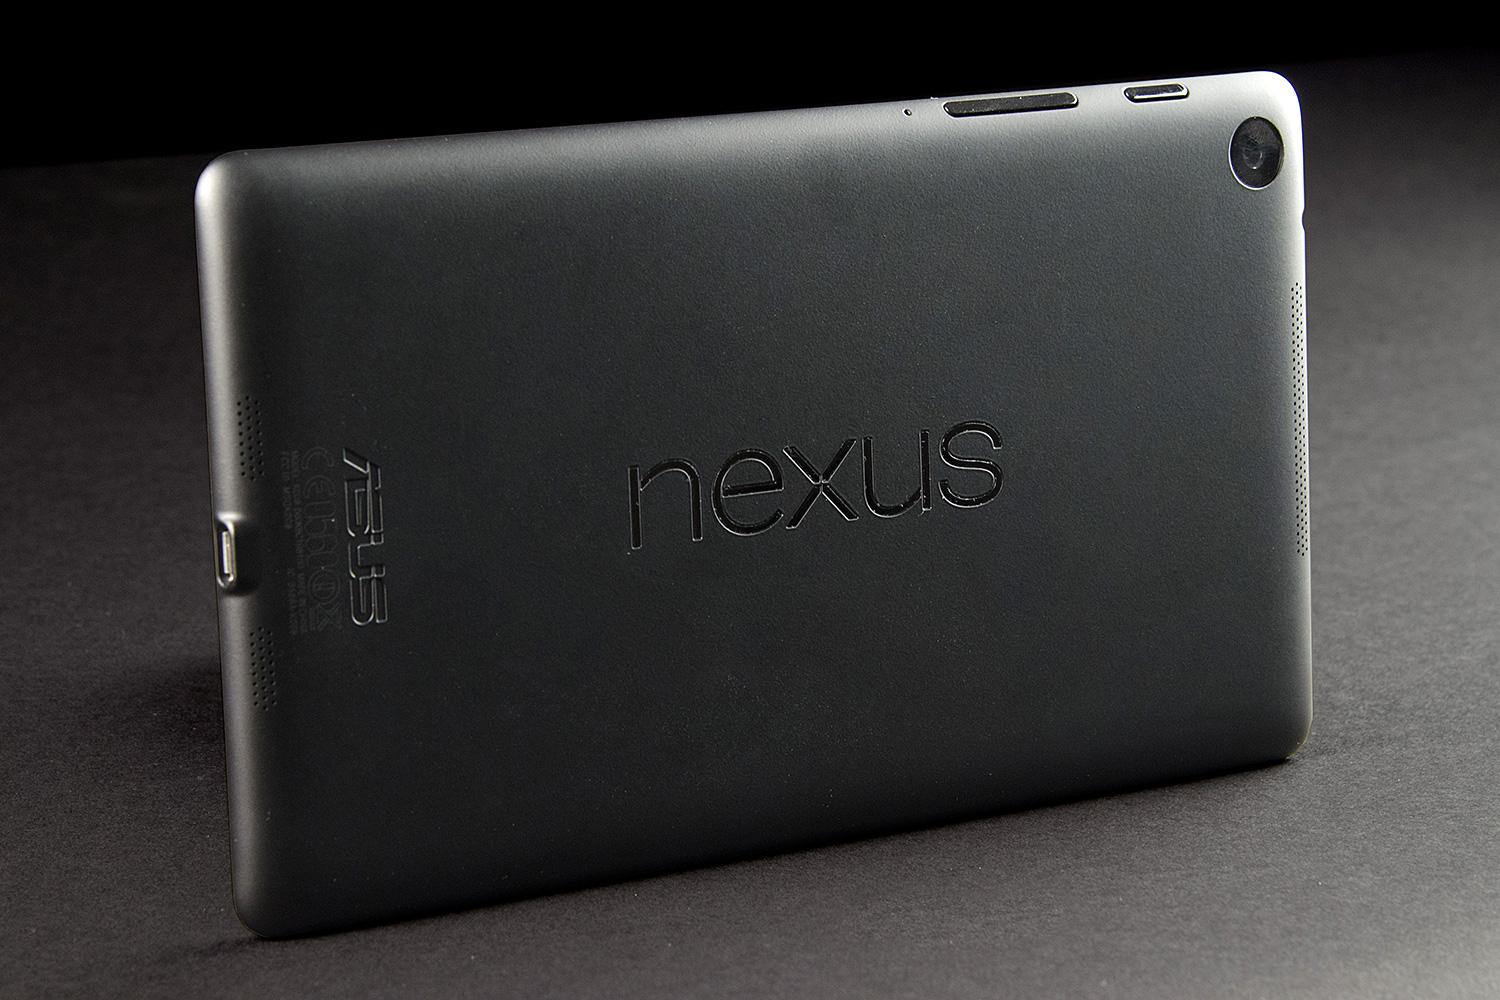 Google Nexus 7 back angle